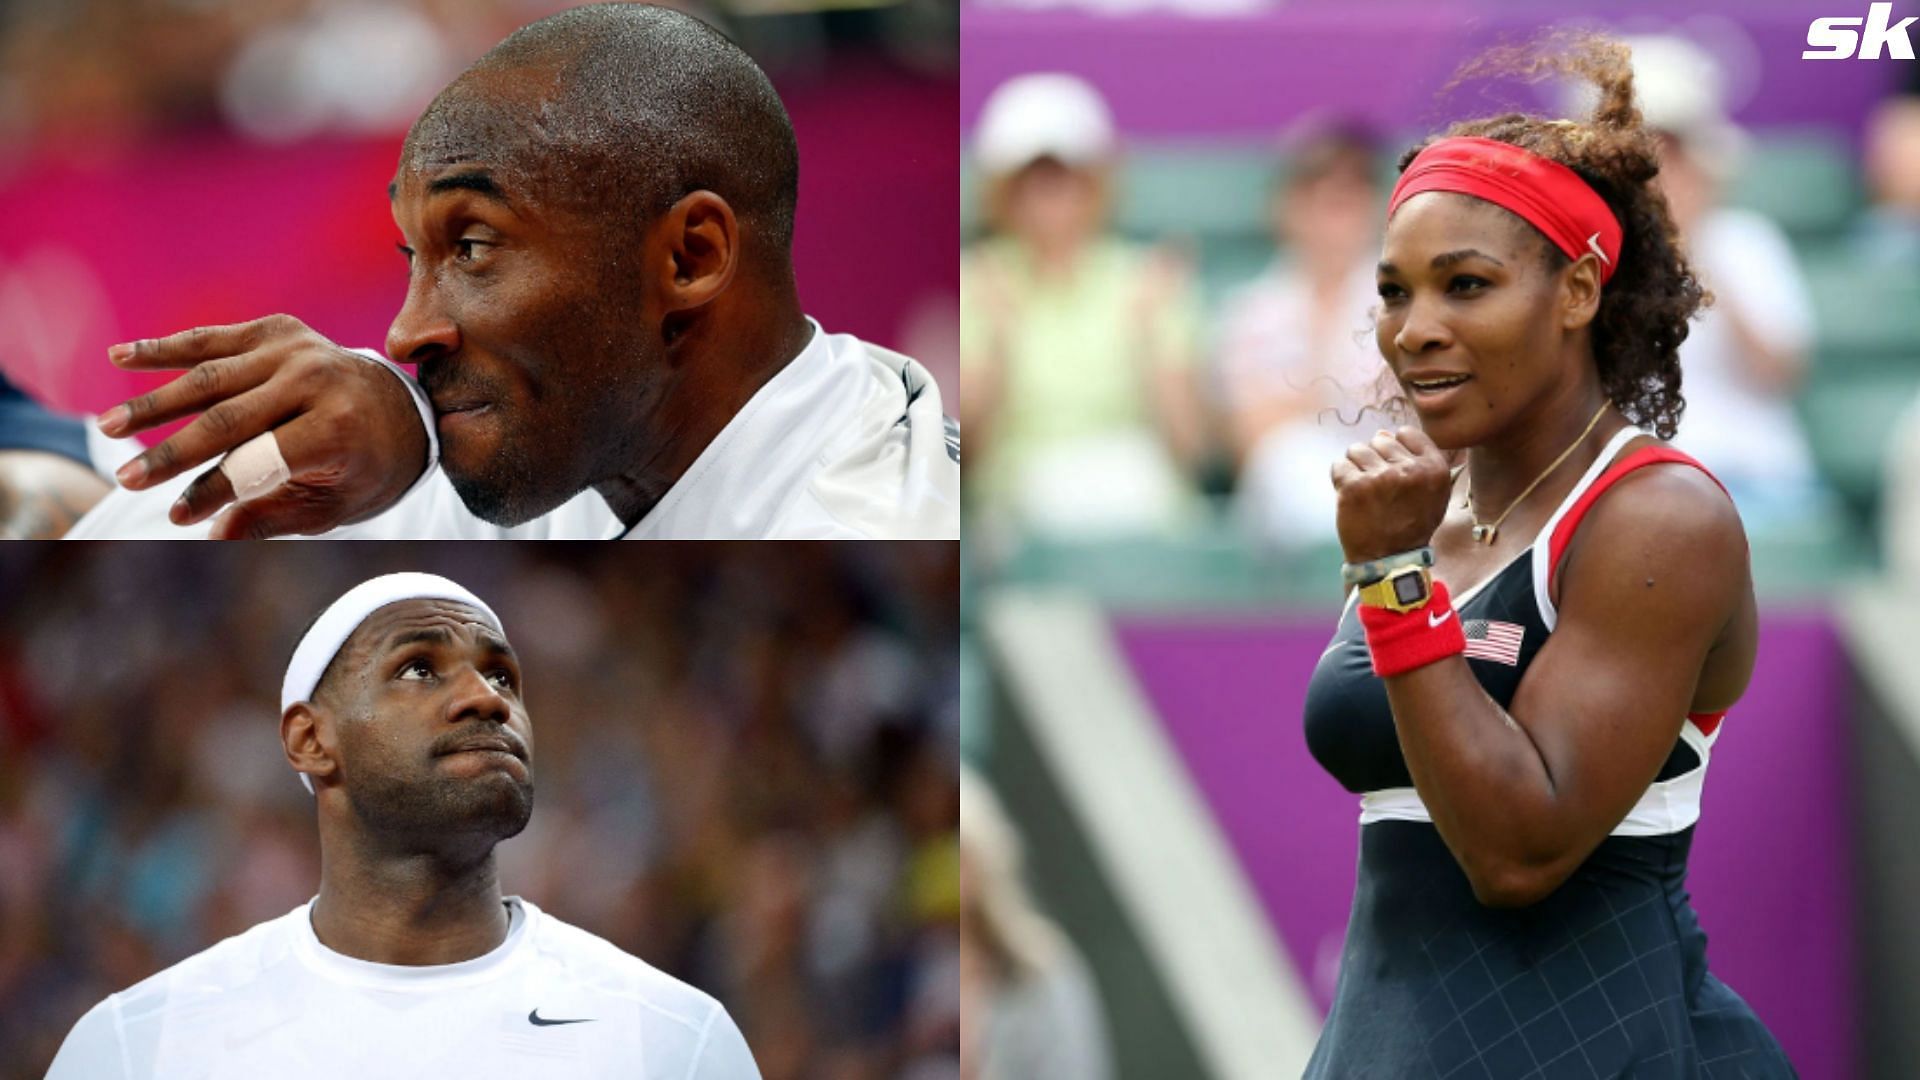 Serena Williams, Kobe Bryant, and LeBron James at the 2012 London Olympics